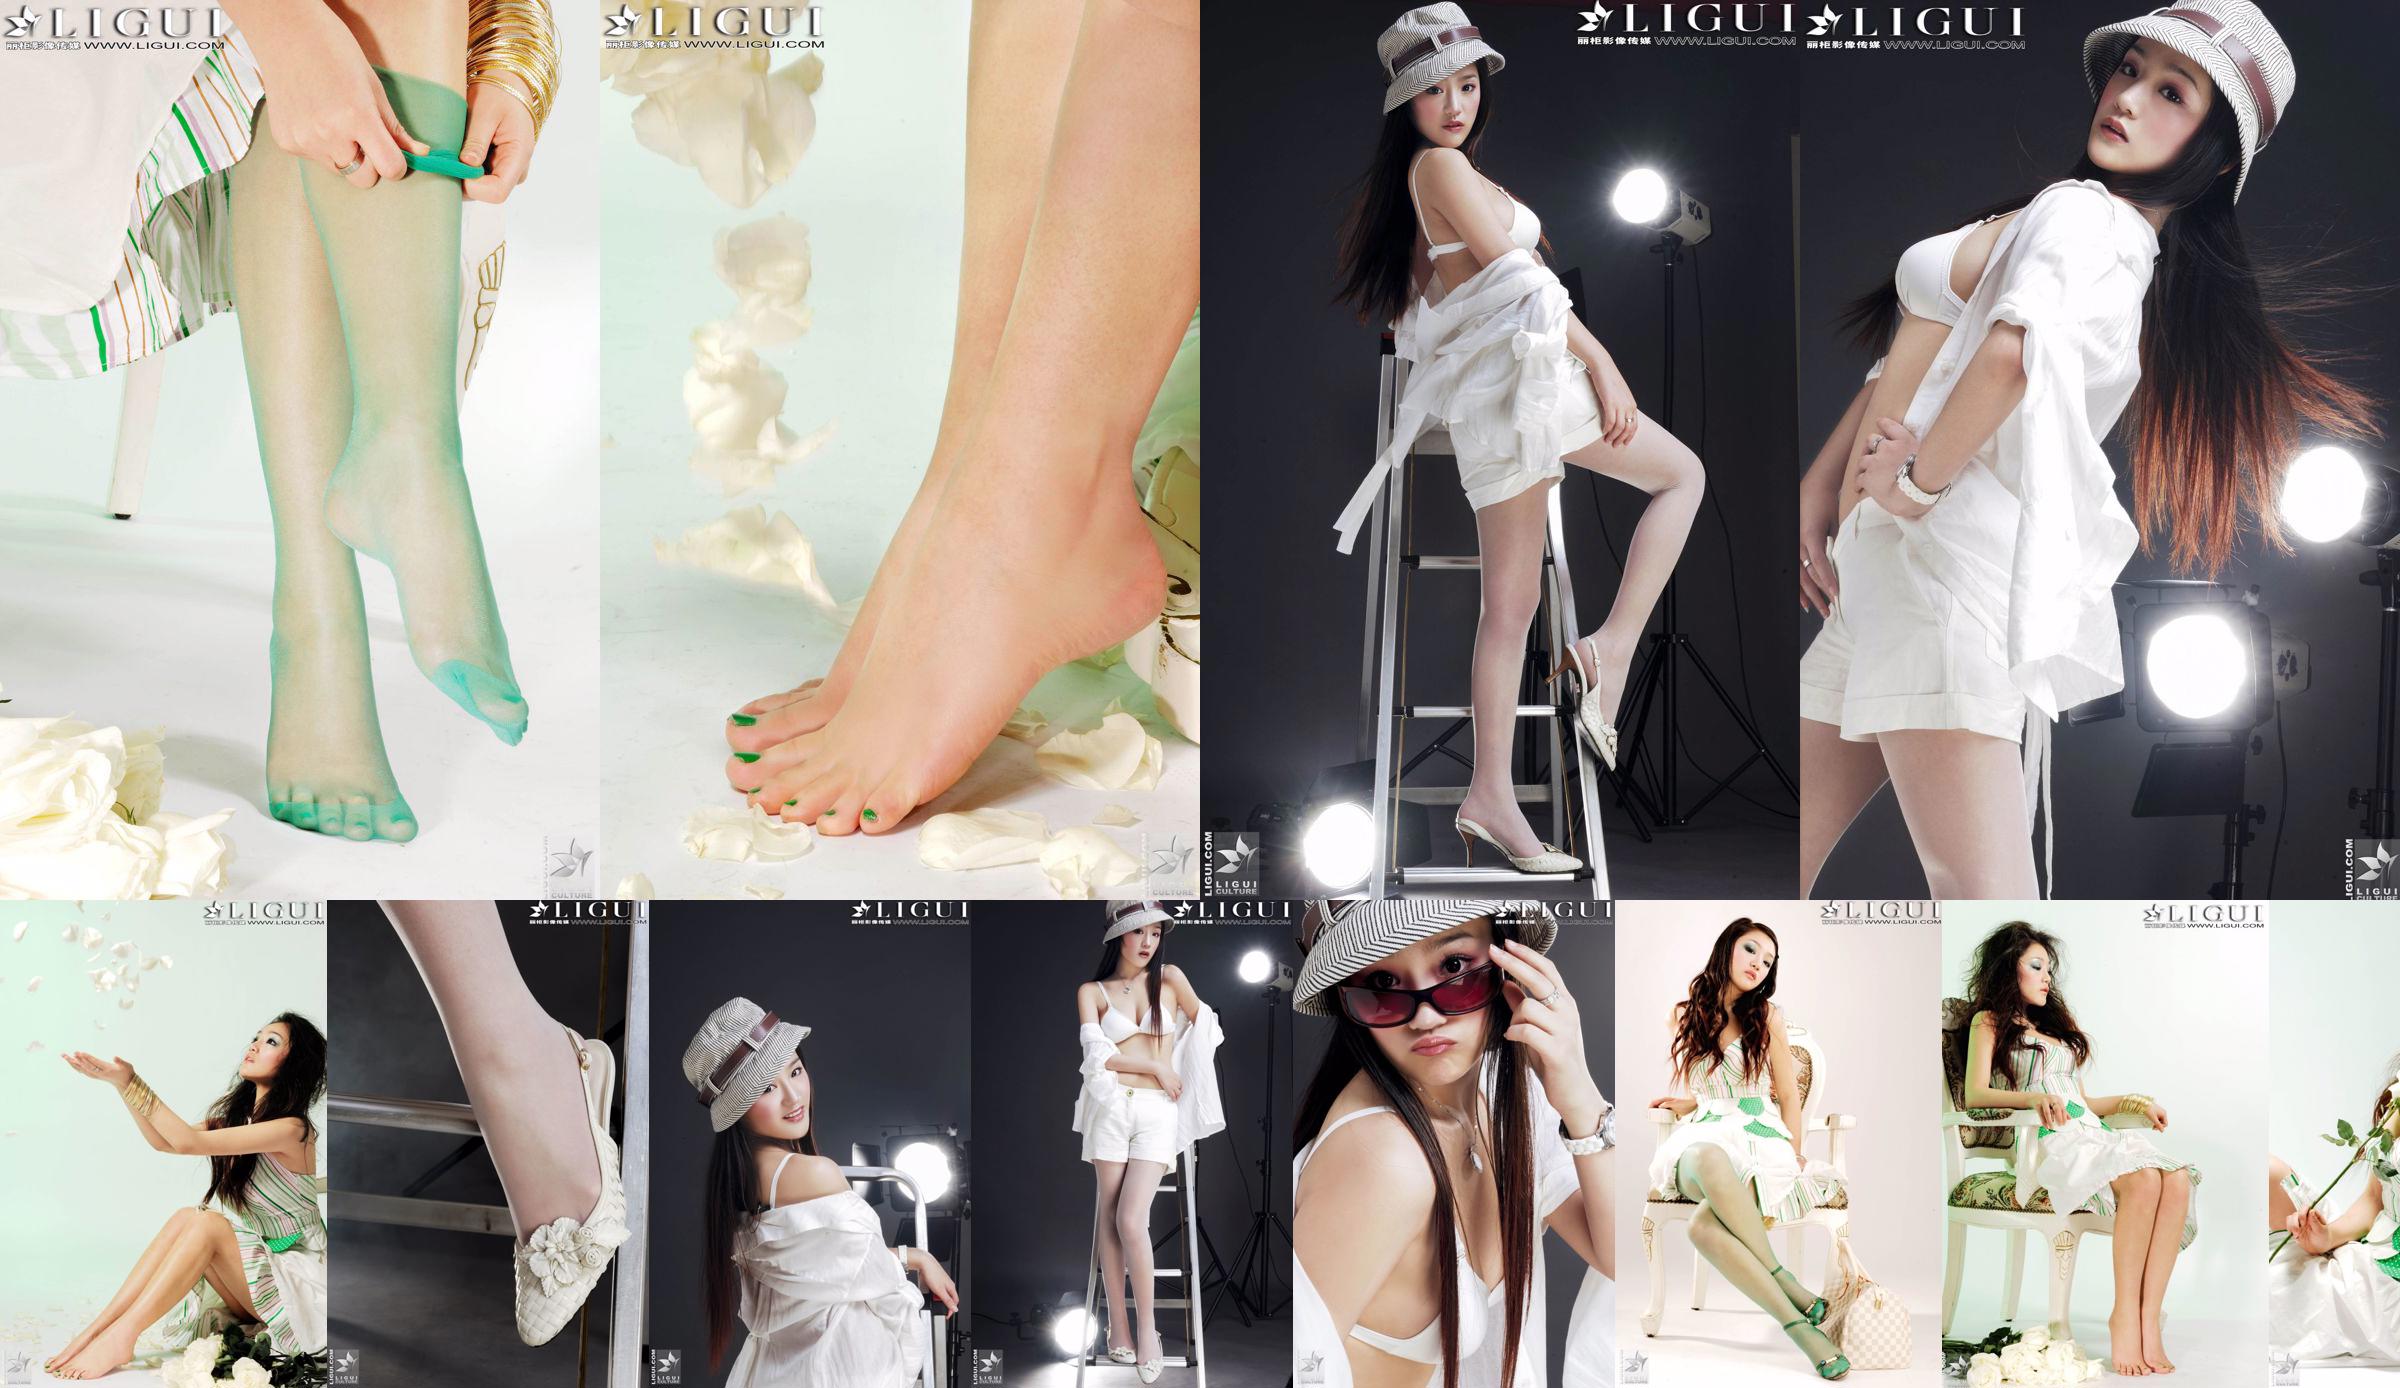 [丽 柜 贵 foot LiGui] Bức ảnh "Chân thời trang" của người mẫu Zhang Jingyan về đôi chân đẹp và đôi chân lụa No.774ad6 Trang 1